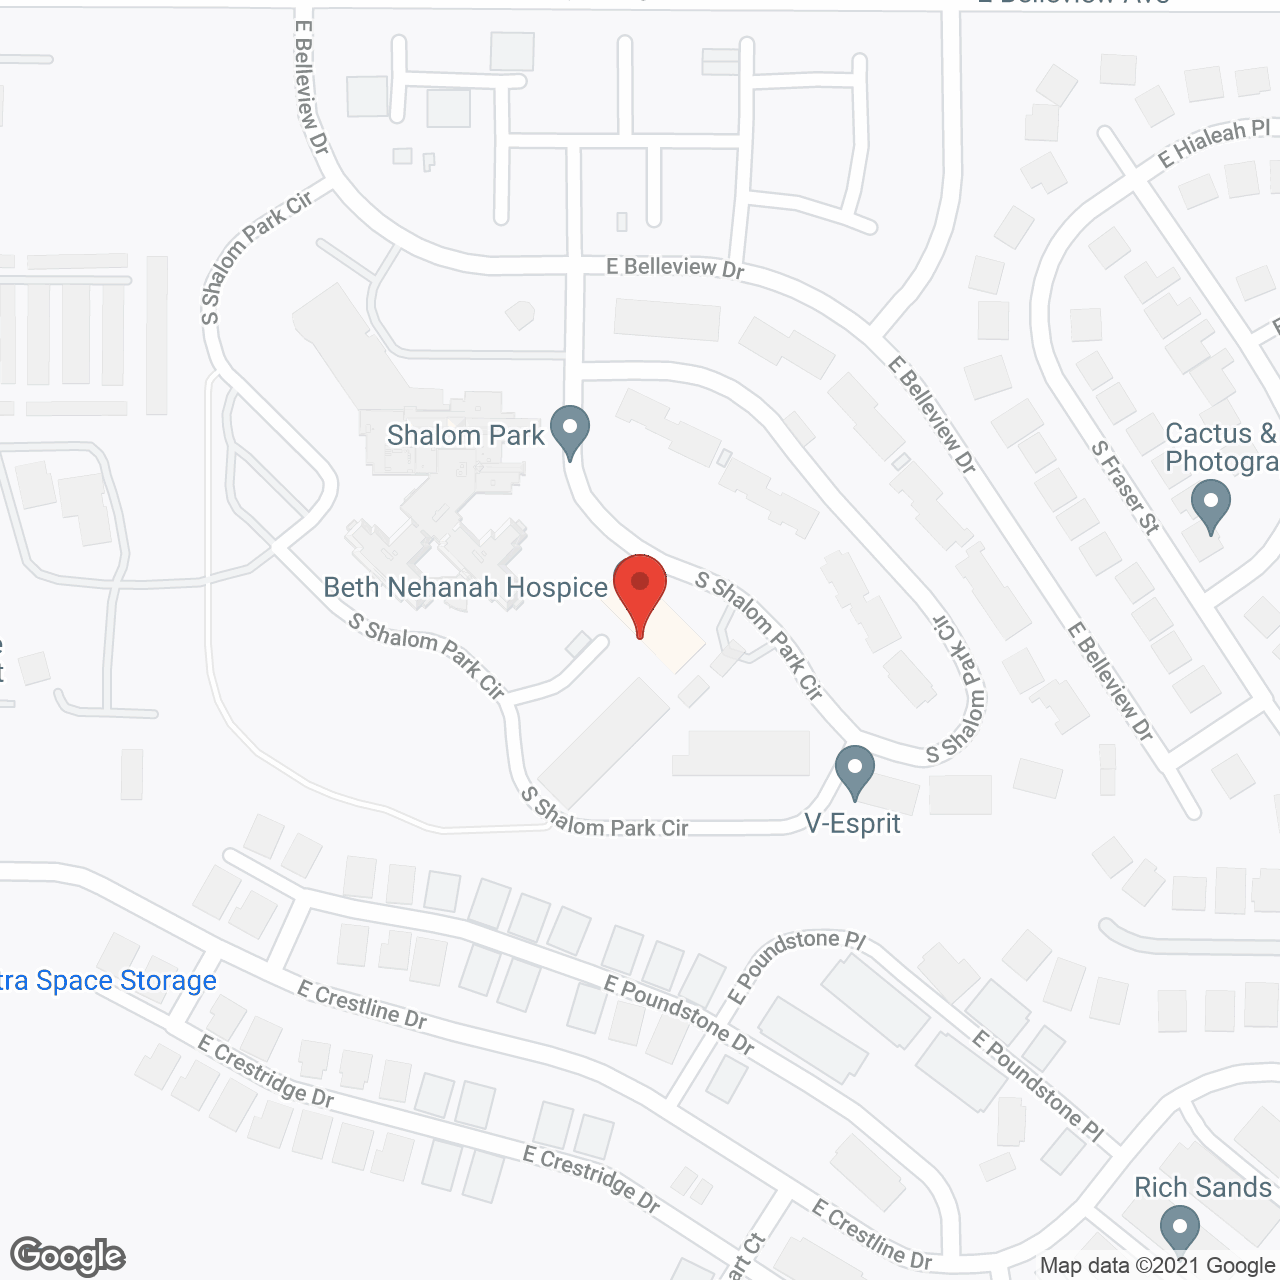 Shalom Park in google map